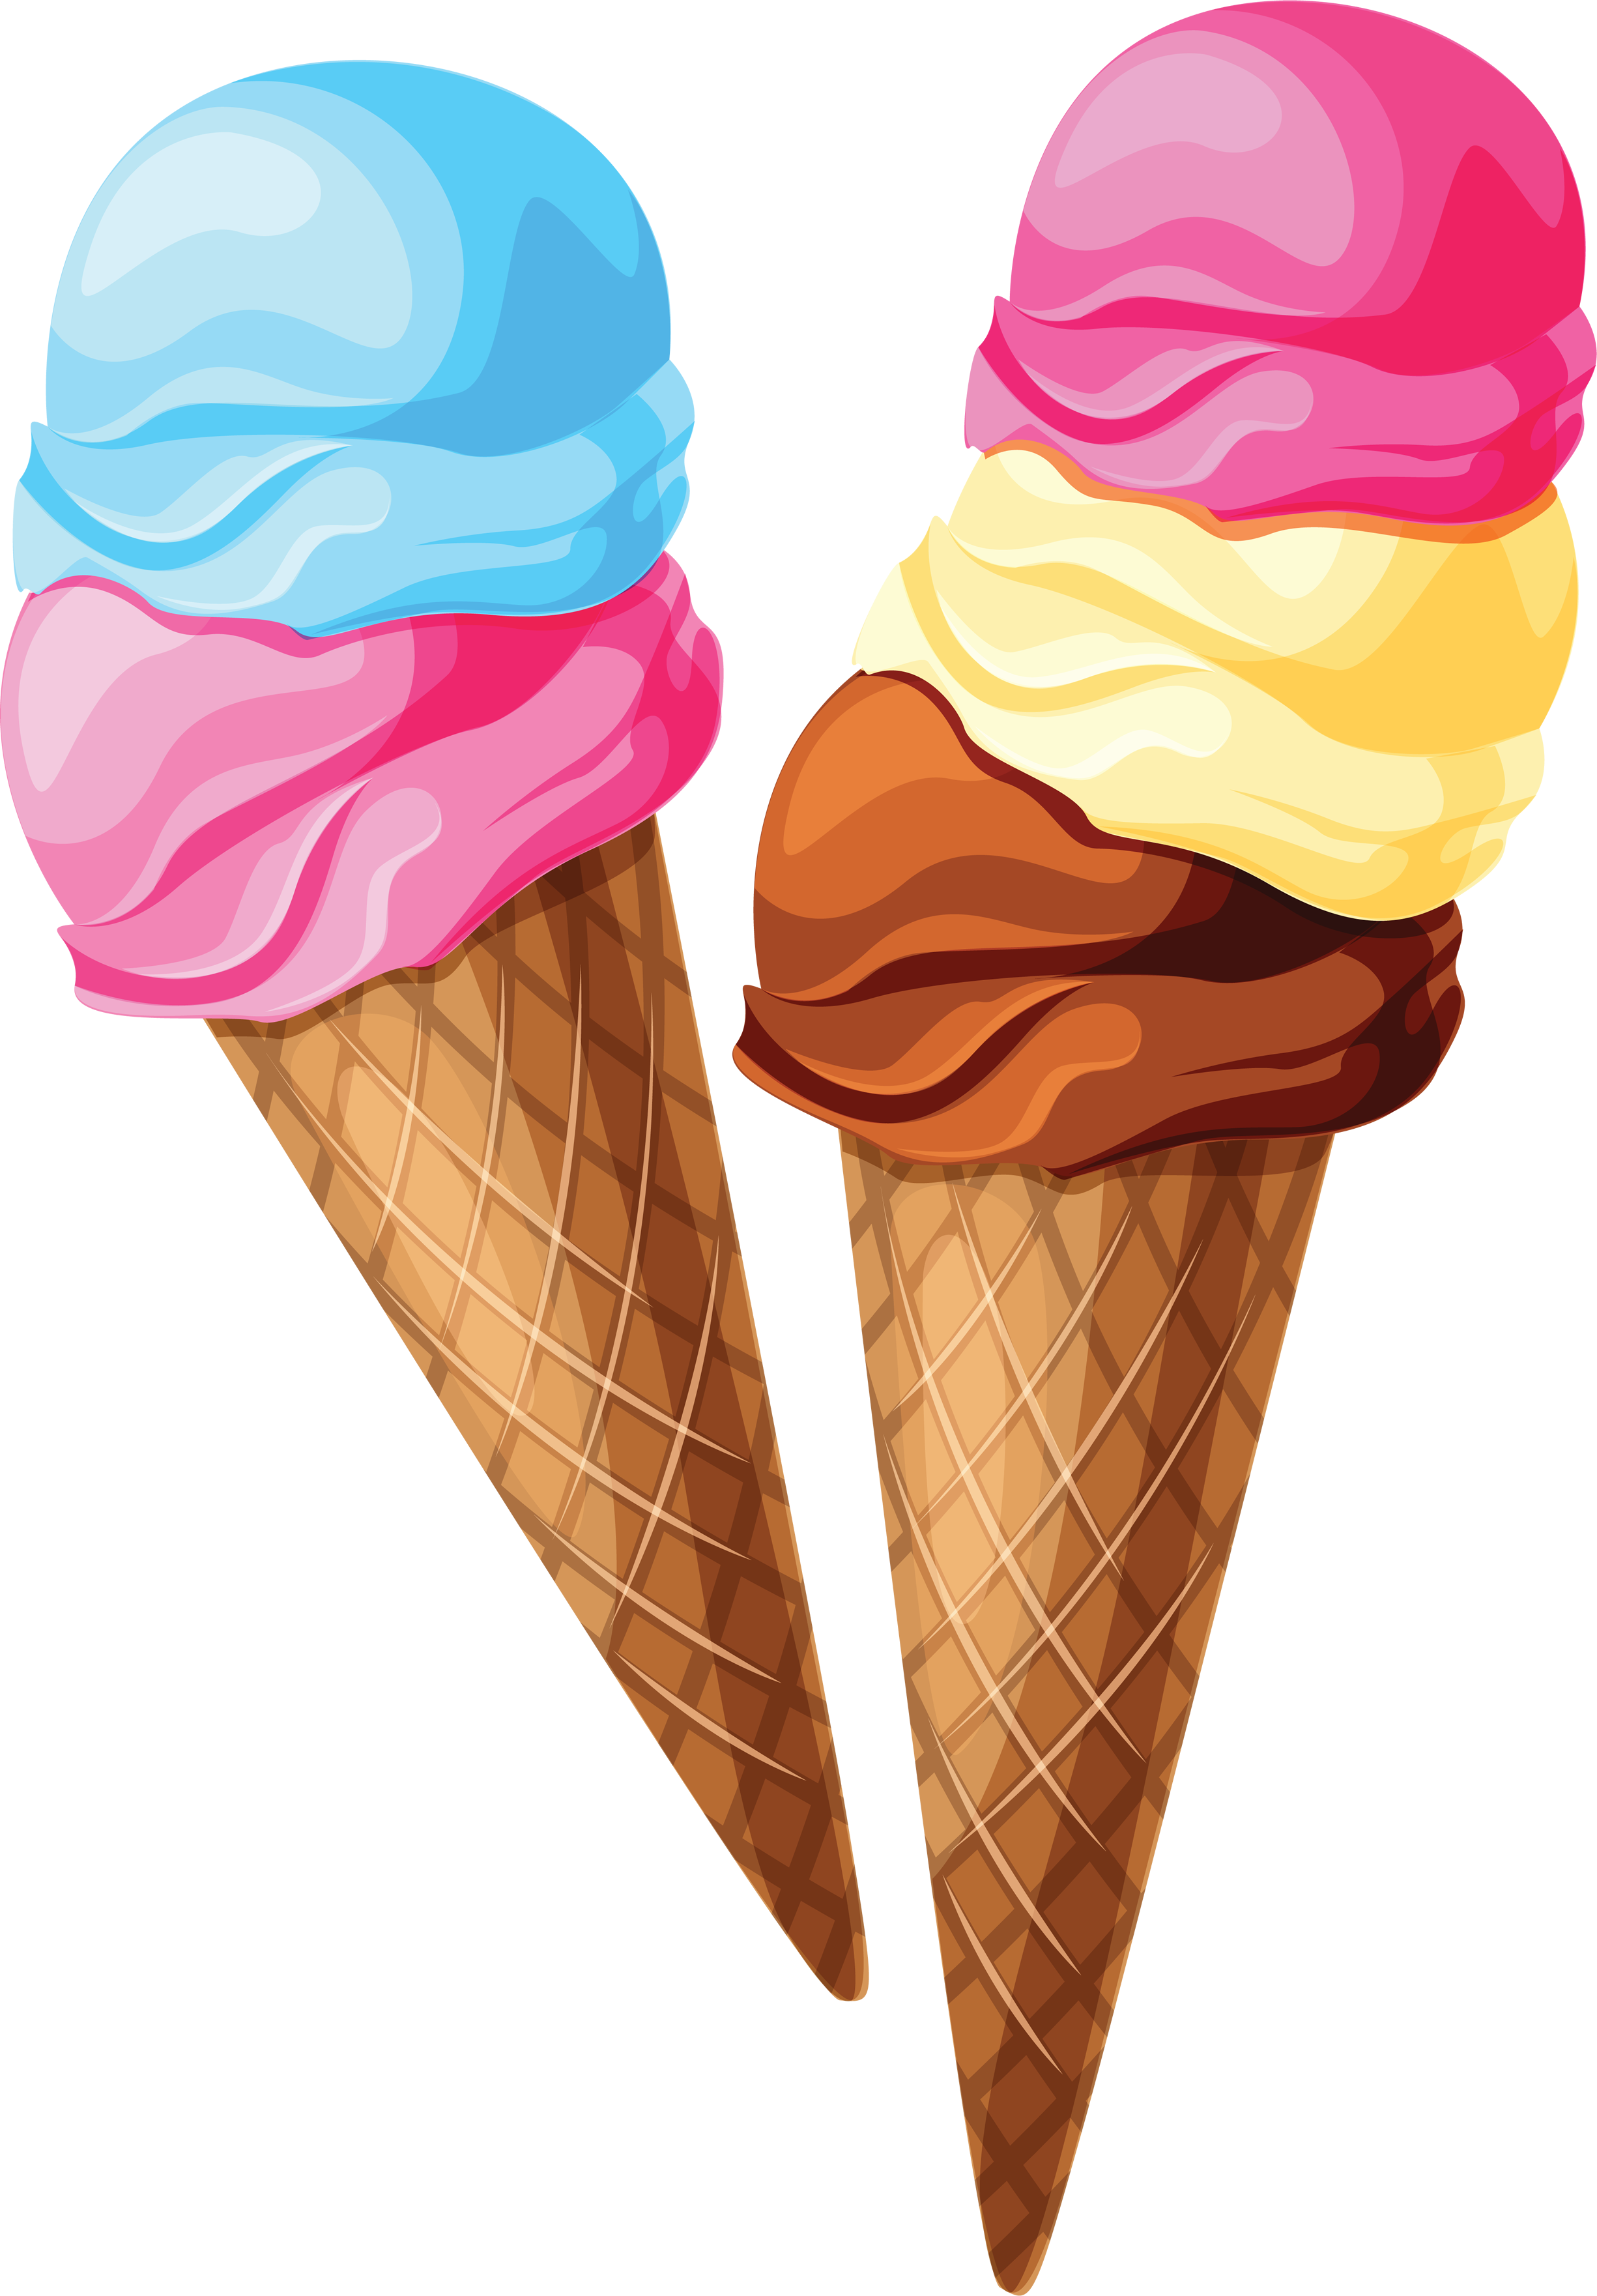 Картинки мороженки. Мороженое айс Крим. Мороженое рожок. Мороженое в рожке на белом фоне. Рисунок мороженого.